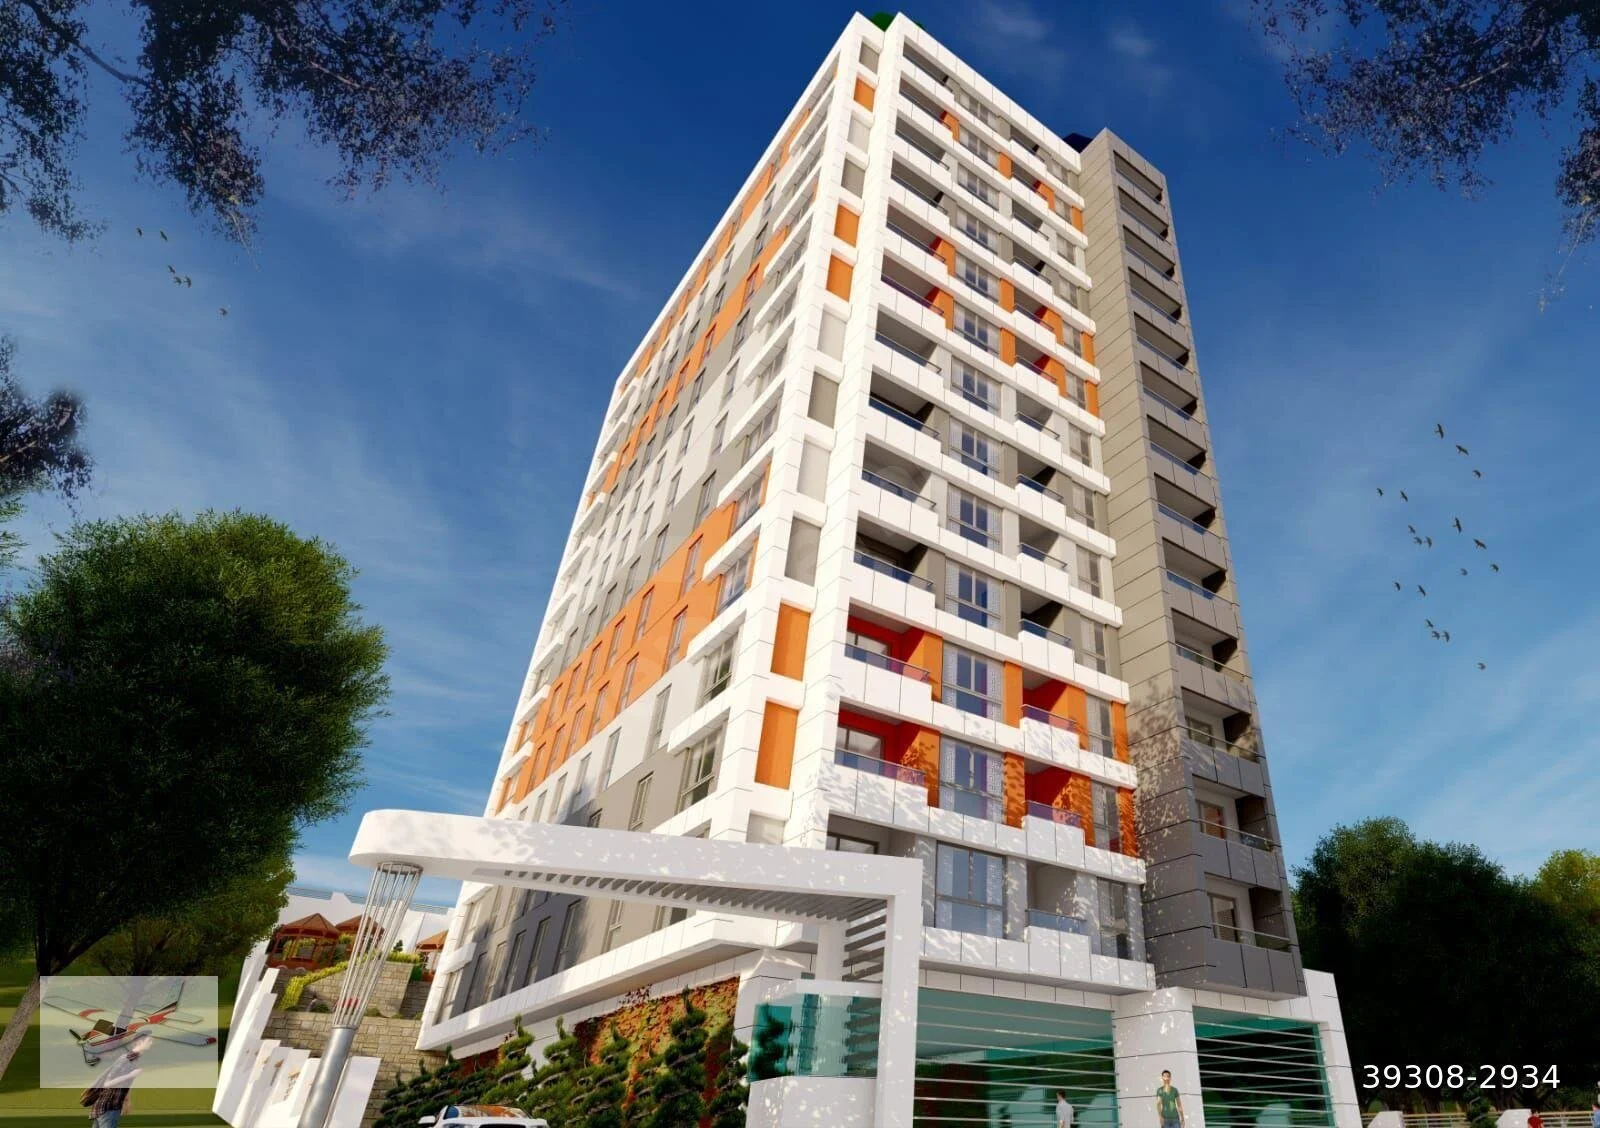 Teras Park Maltepe Apartments in Maltepe, Istanbul